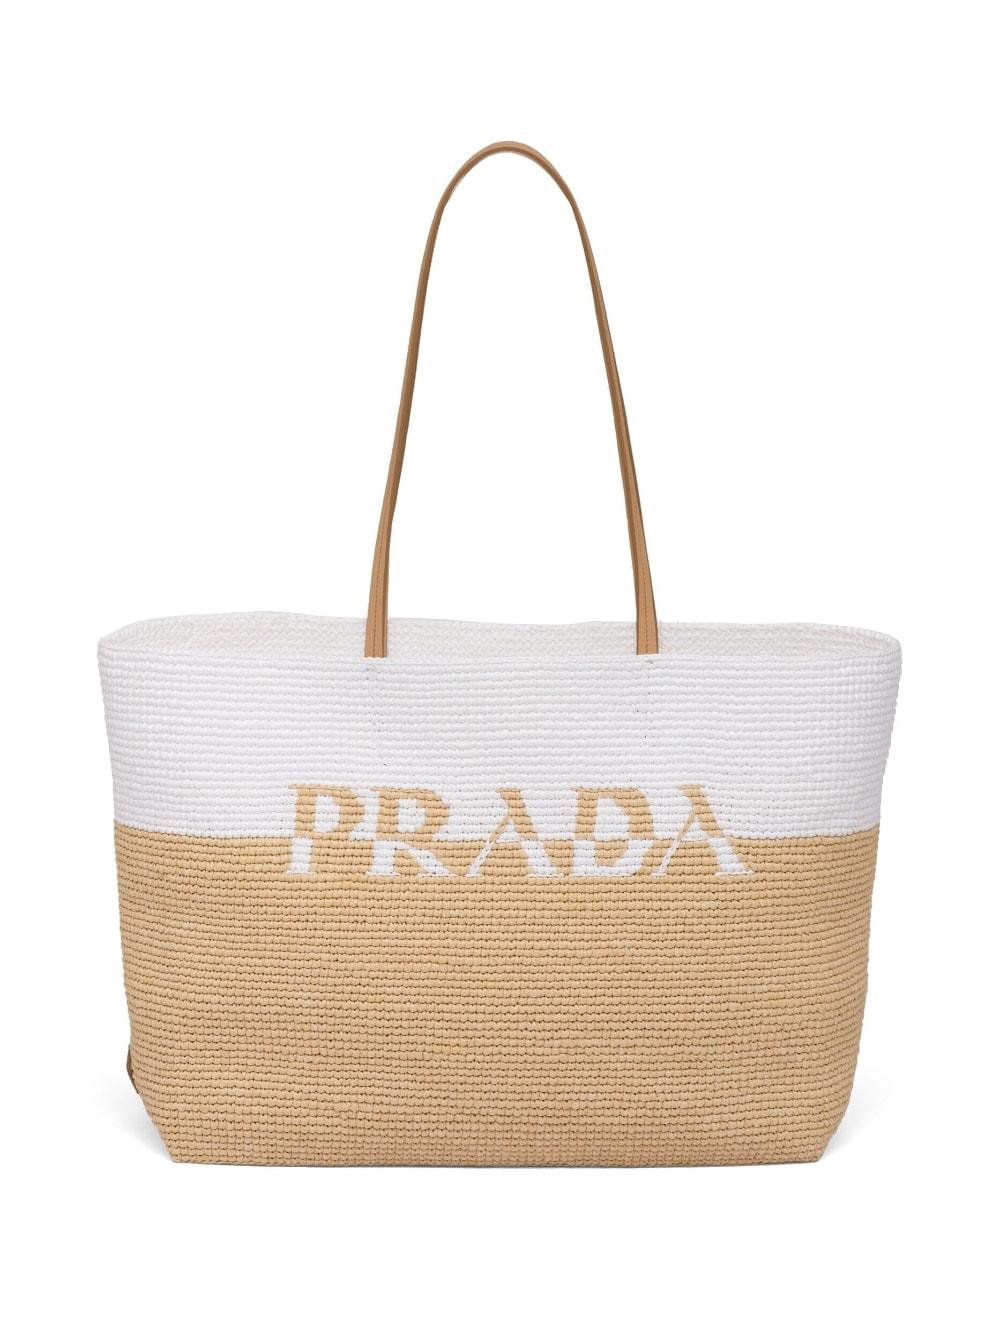 Prada Logo Raffia Tote Bag in Natural | Lyst